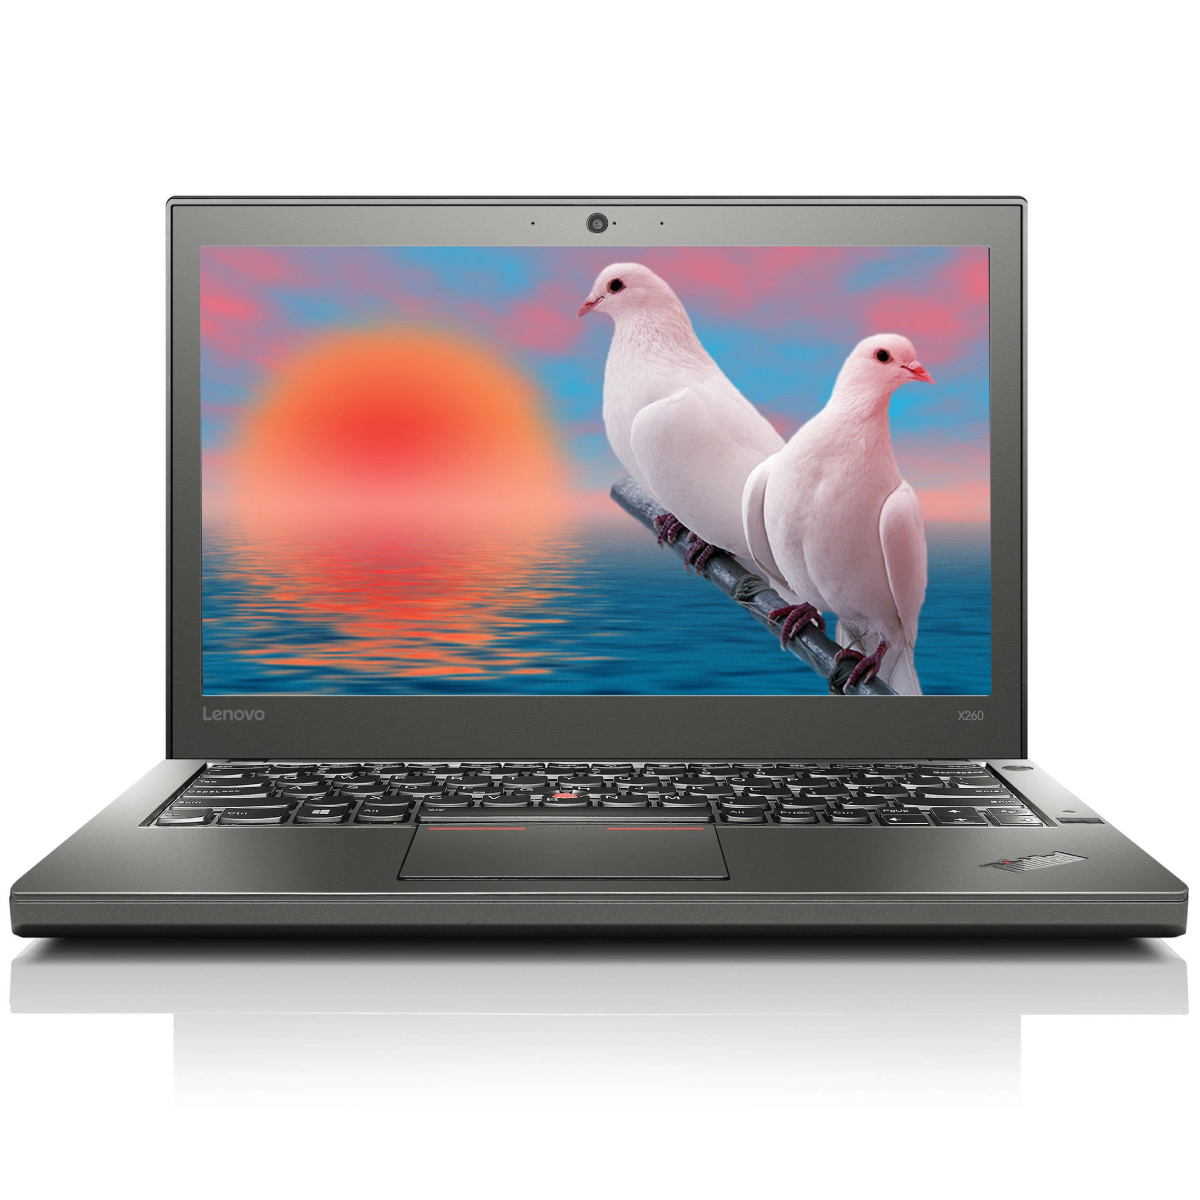 Lenovo ThinkPad X260 12.5 1366x768 i5-6200U 16GB 128SSD WIN10Pro RENEW AB2796 (ABC051152796)